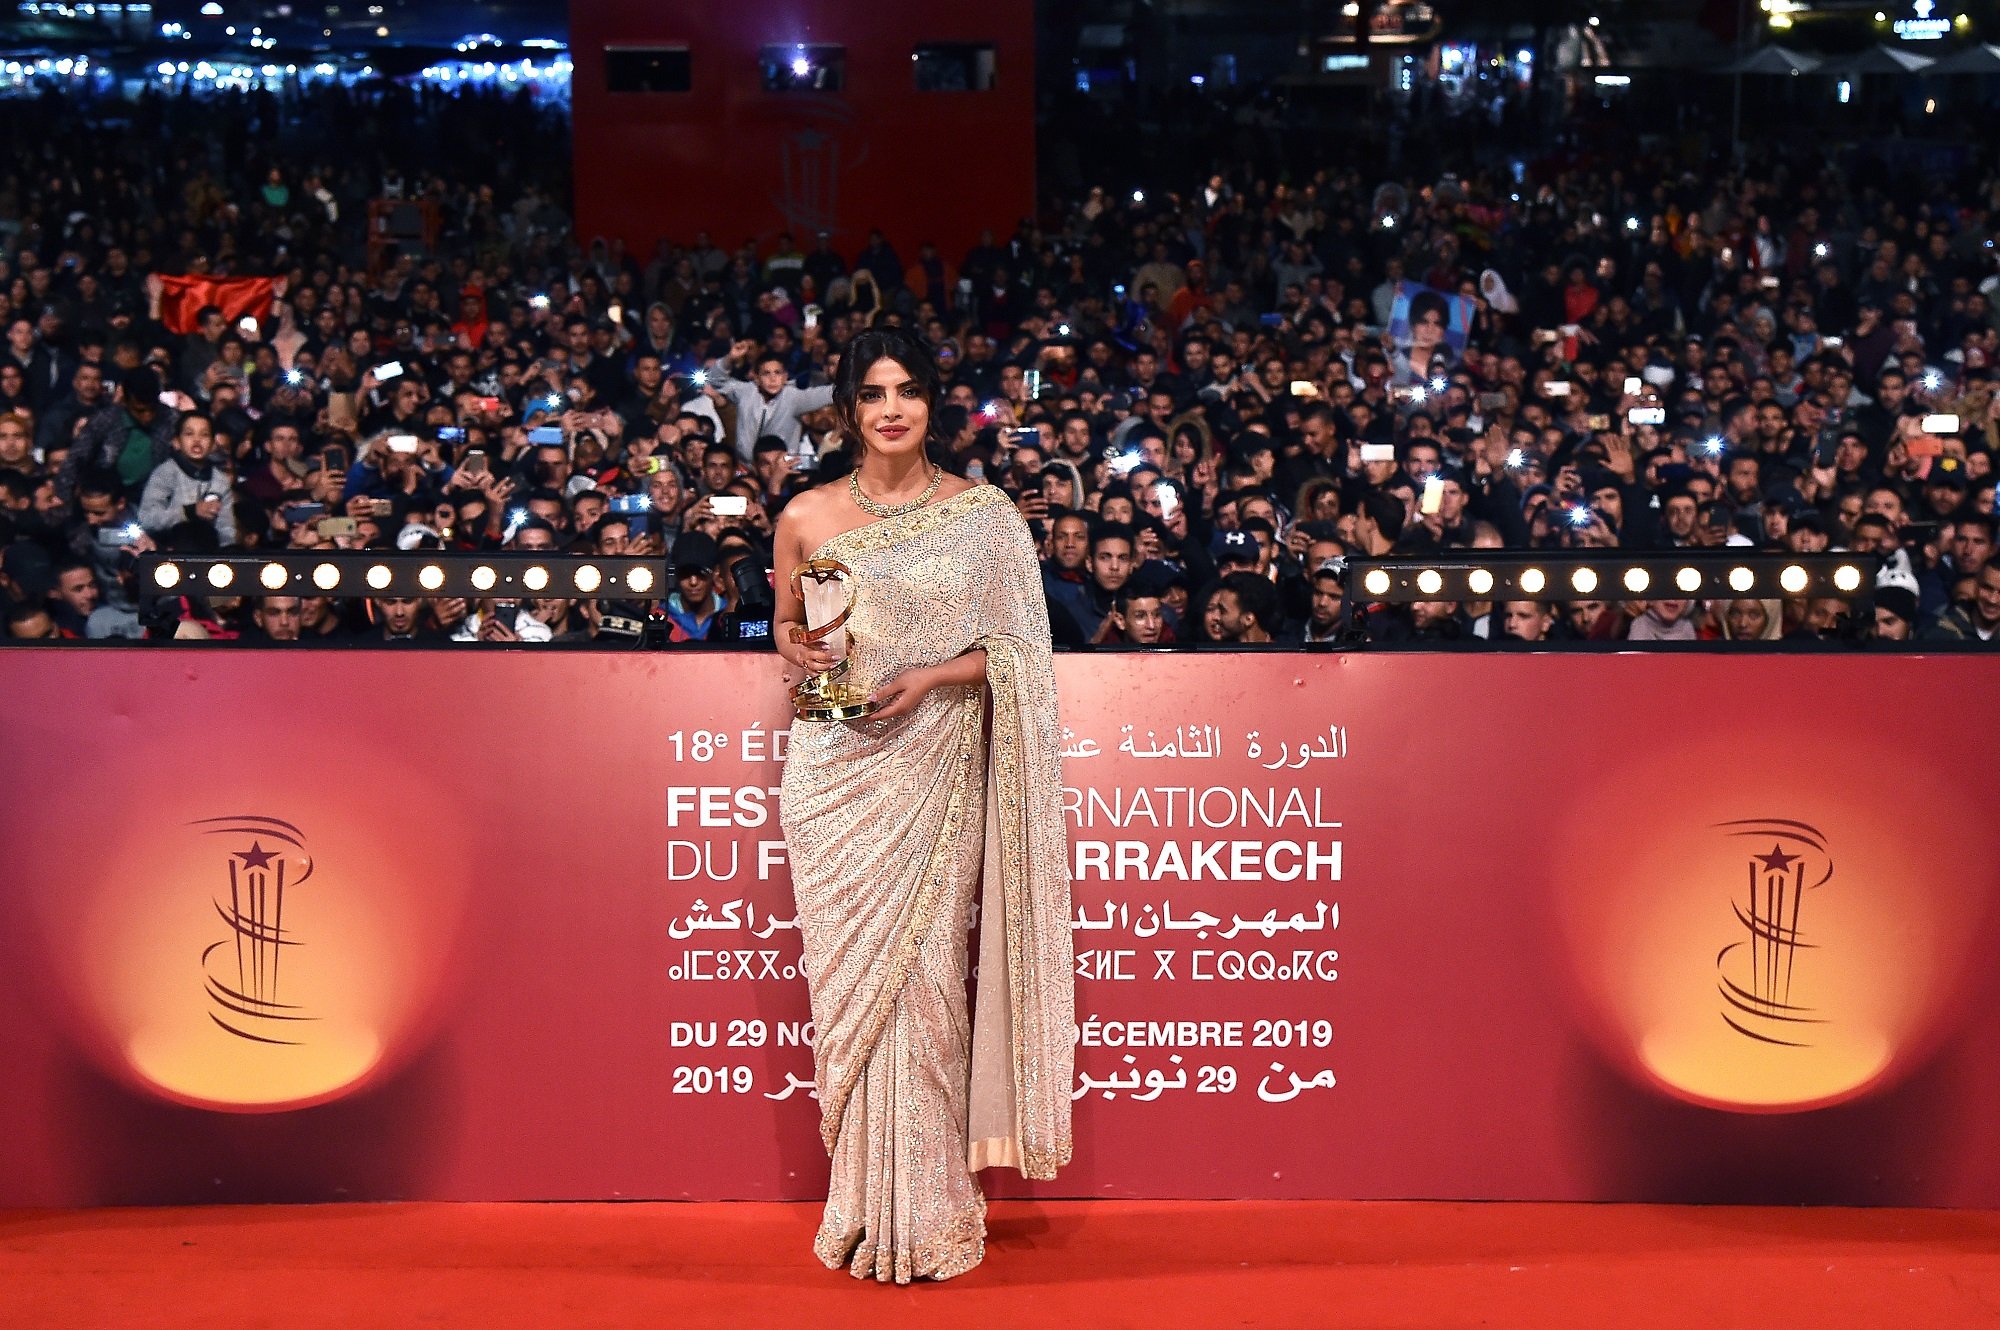 Priyanka Chopra Jonas on a red carpet with a trophy